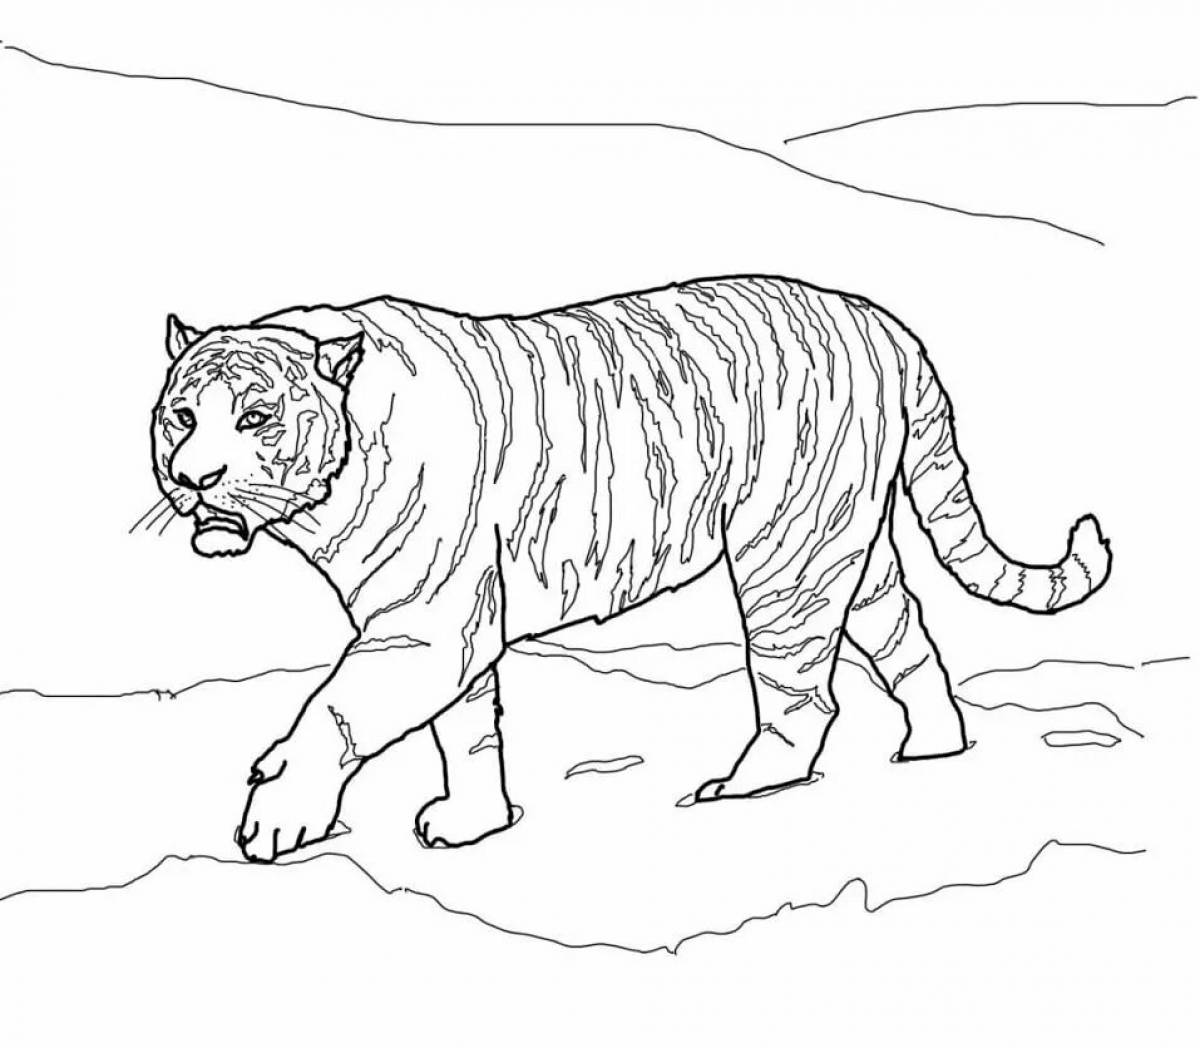 Ussuri tiger #14